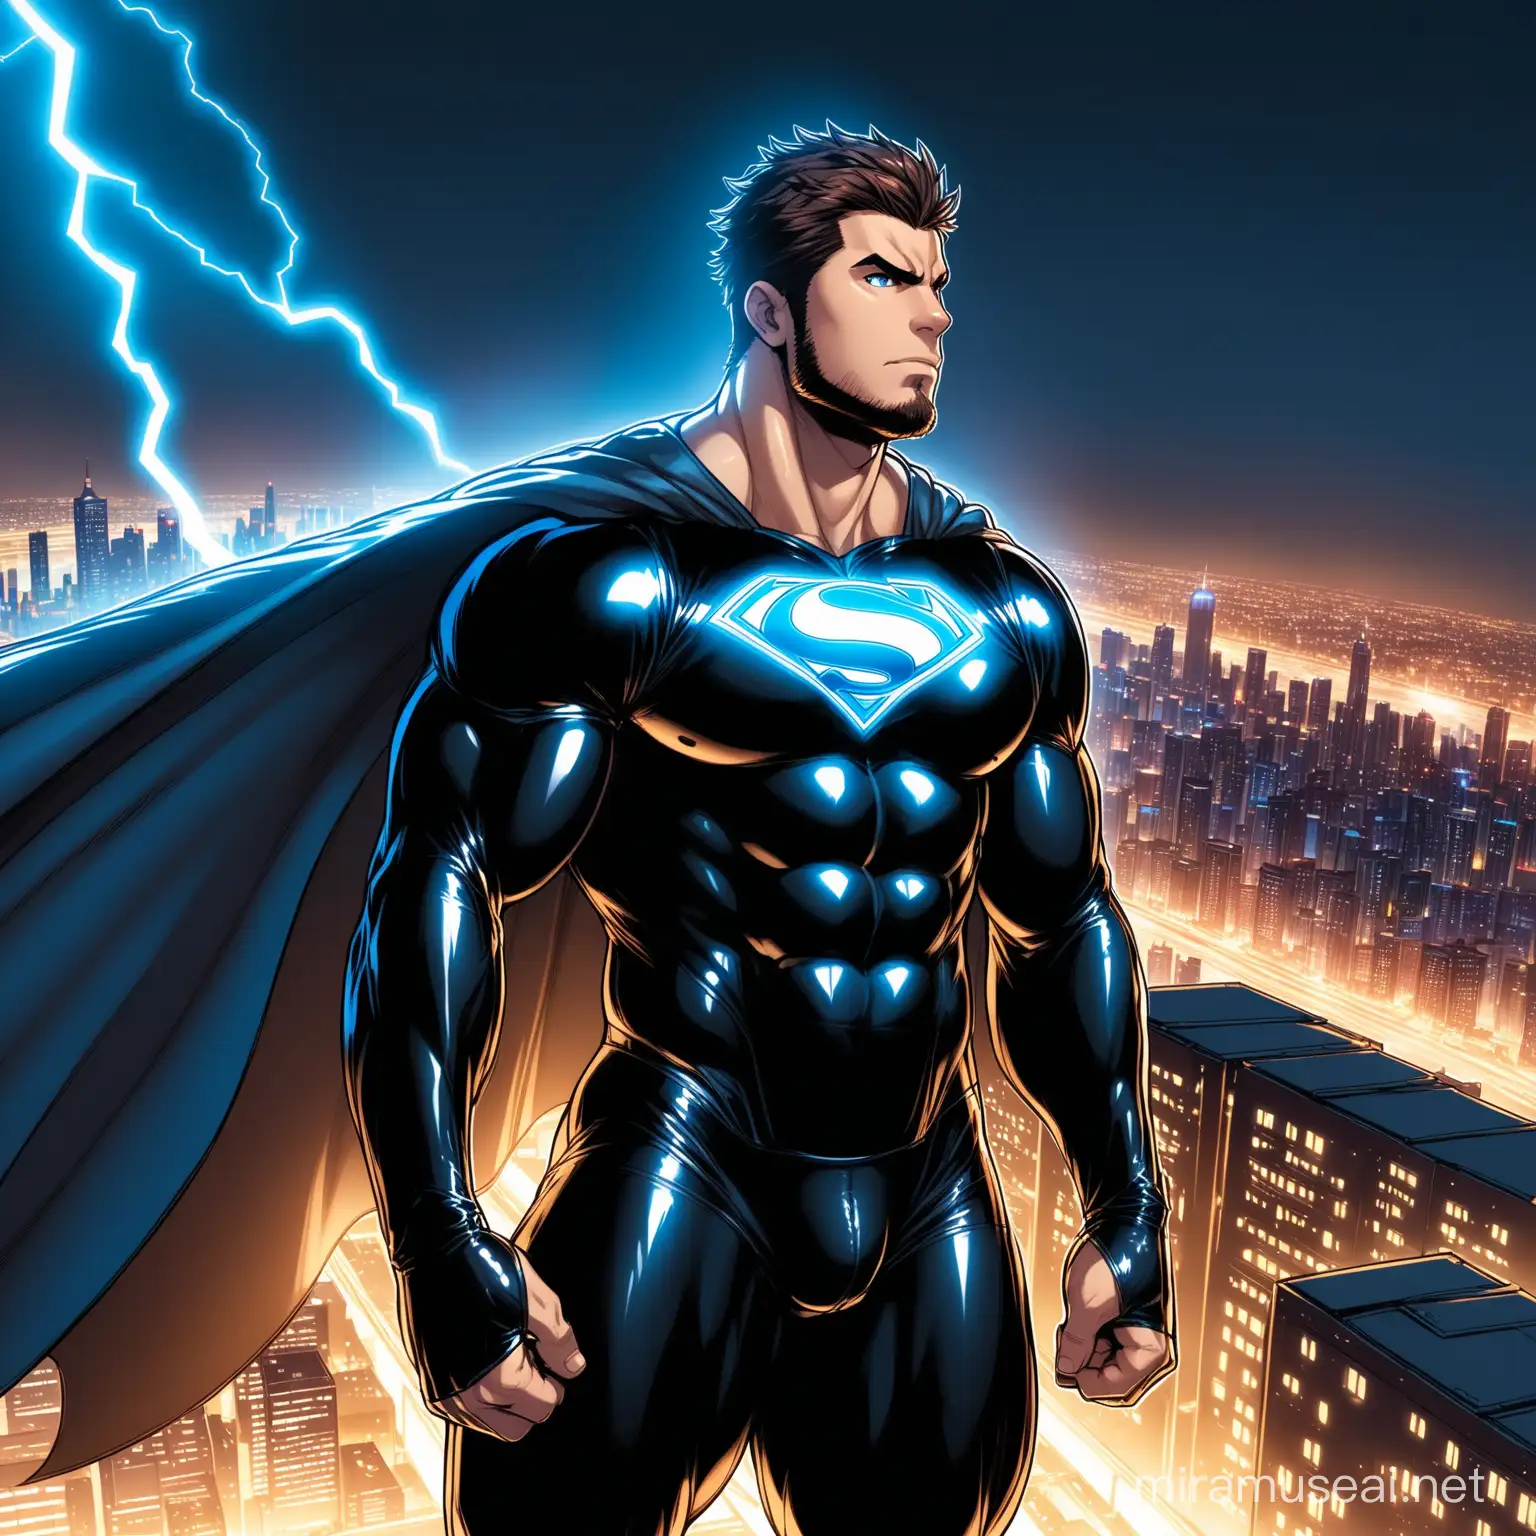 bara superhero, tight black latex costume, big cape, electric powers, city background, dramatic rim lighting, visible bulge, blue eyes, short brown hair